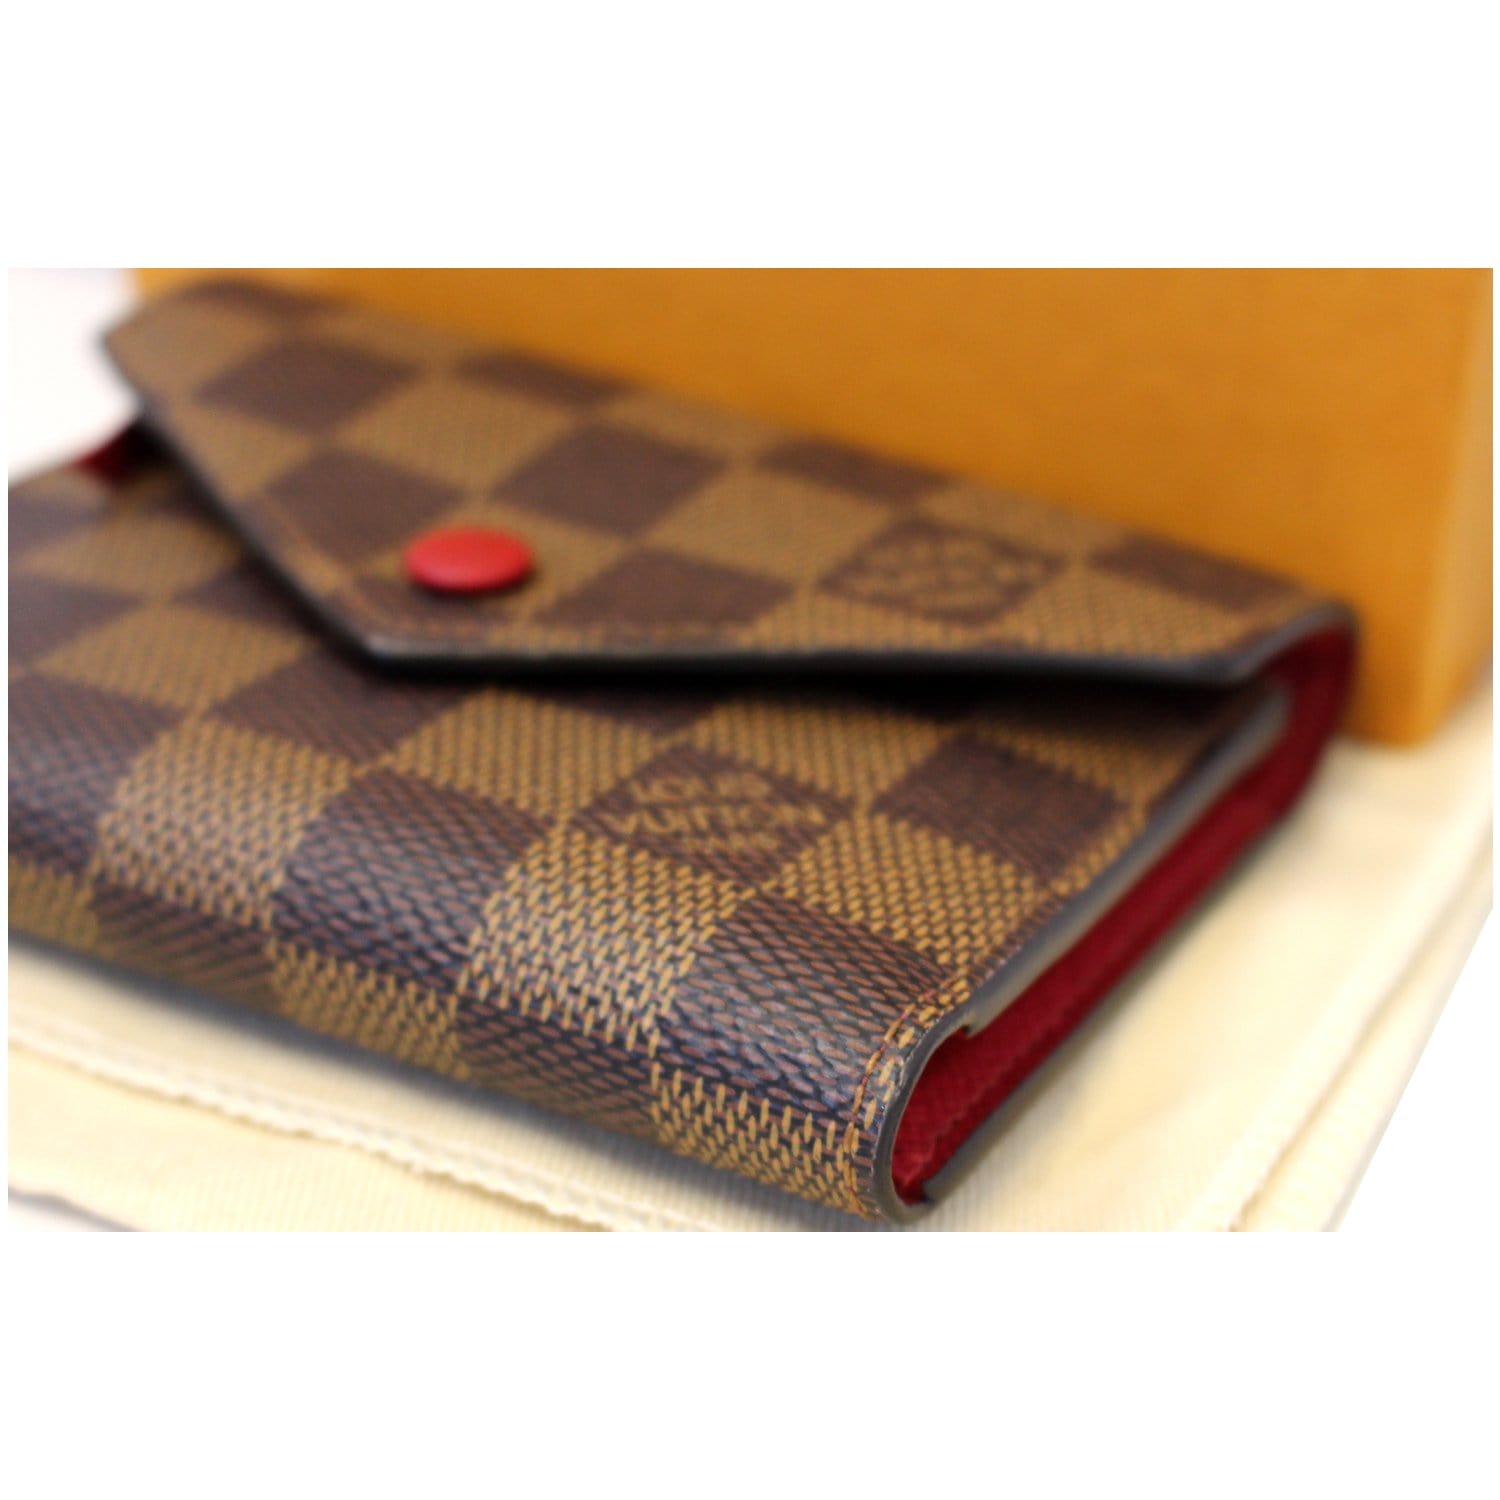 Authentic Louis Vuitton Victorine Wallet Damier Ebene RedSD1198 Receipt